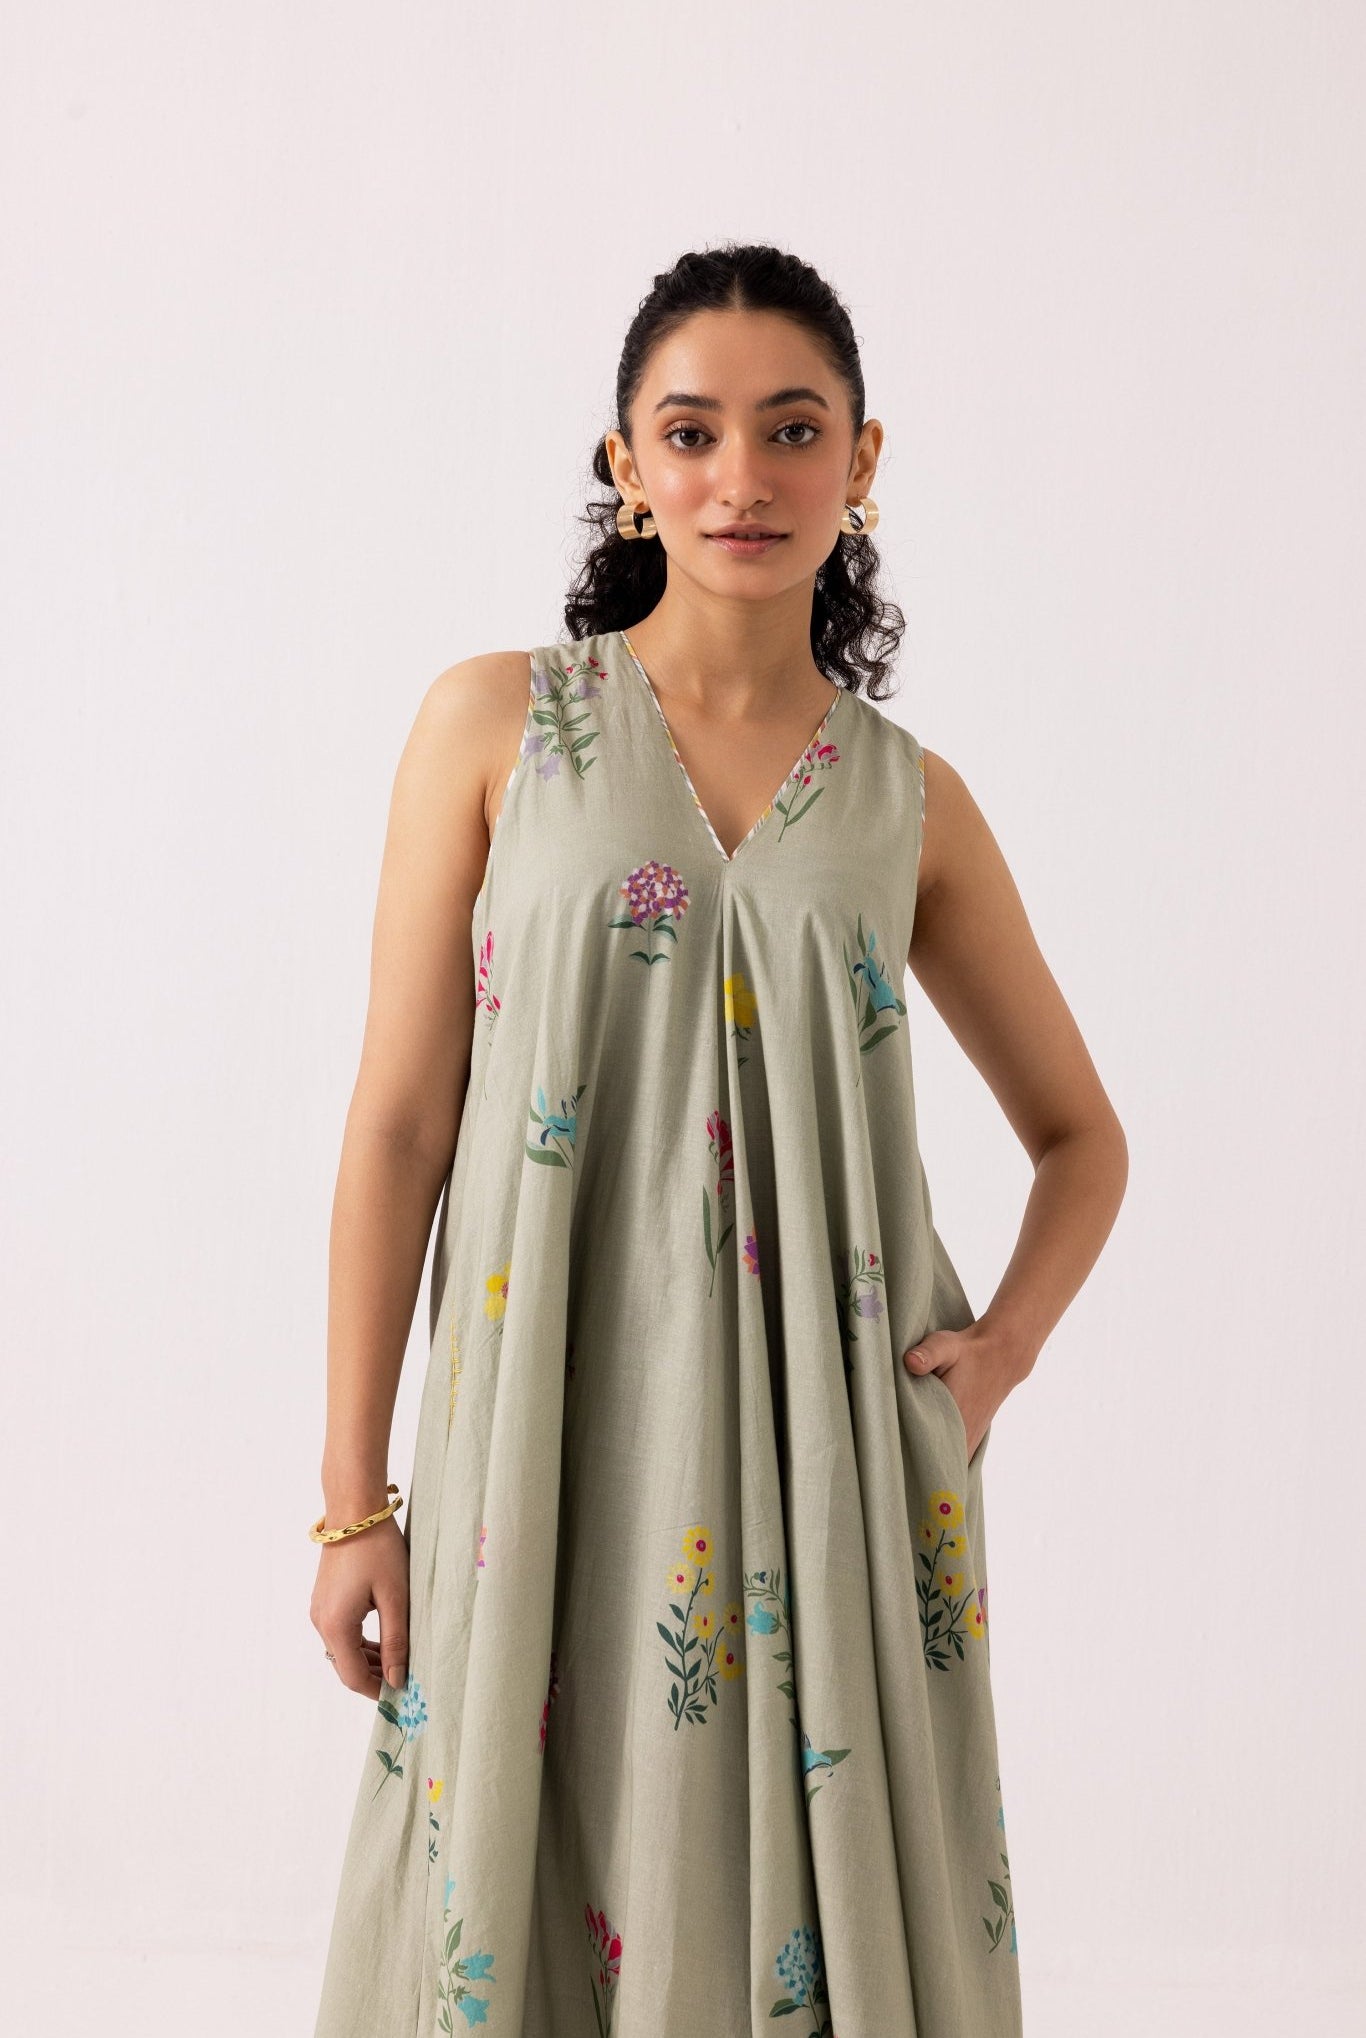 Orchid Dress - Sage Green - CiceroniJacket, DressLabel Shreya Sharma